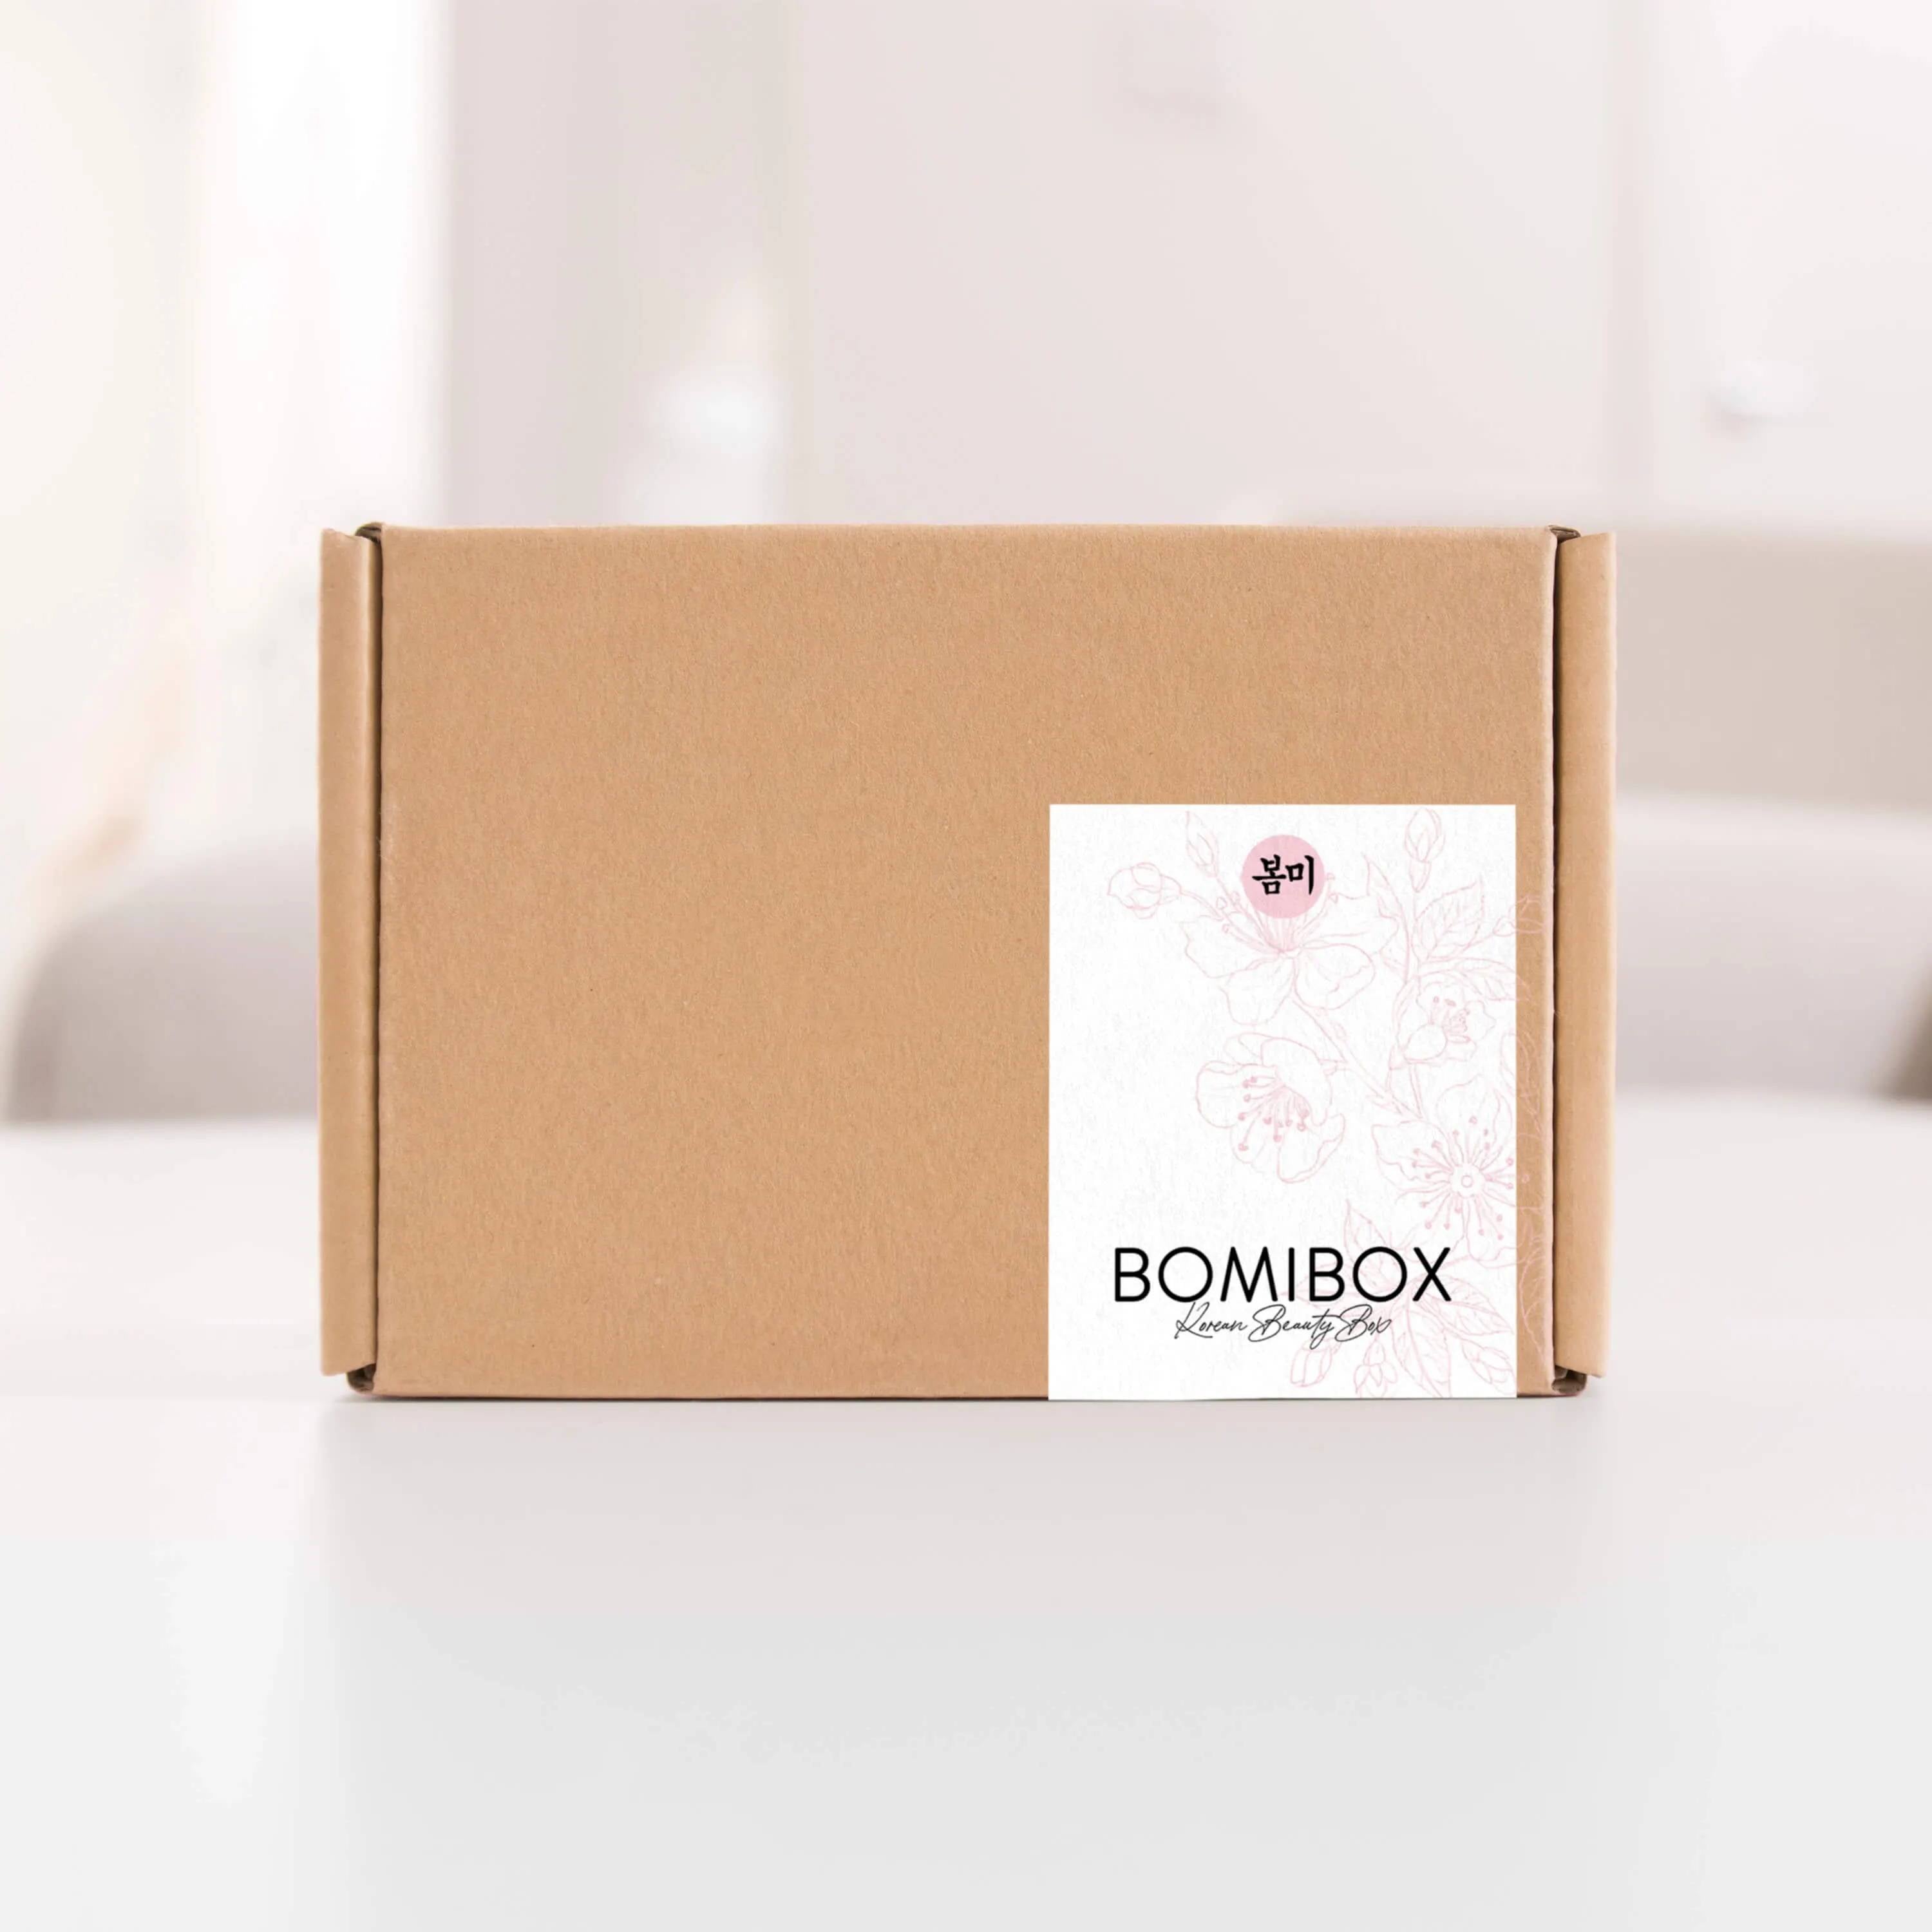 Past Boxes-Bomibox Holiday #11 - Korean Beauty Box Monthly Korean Skincare Subscription